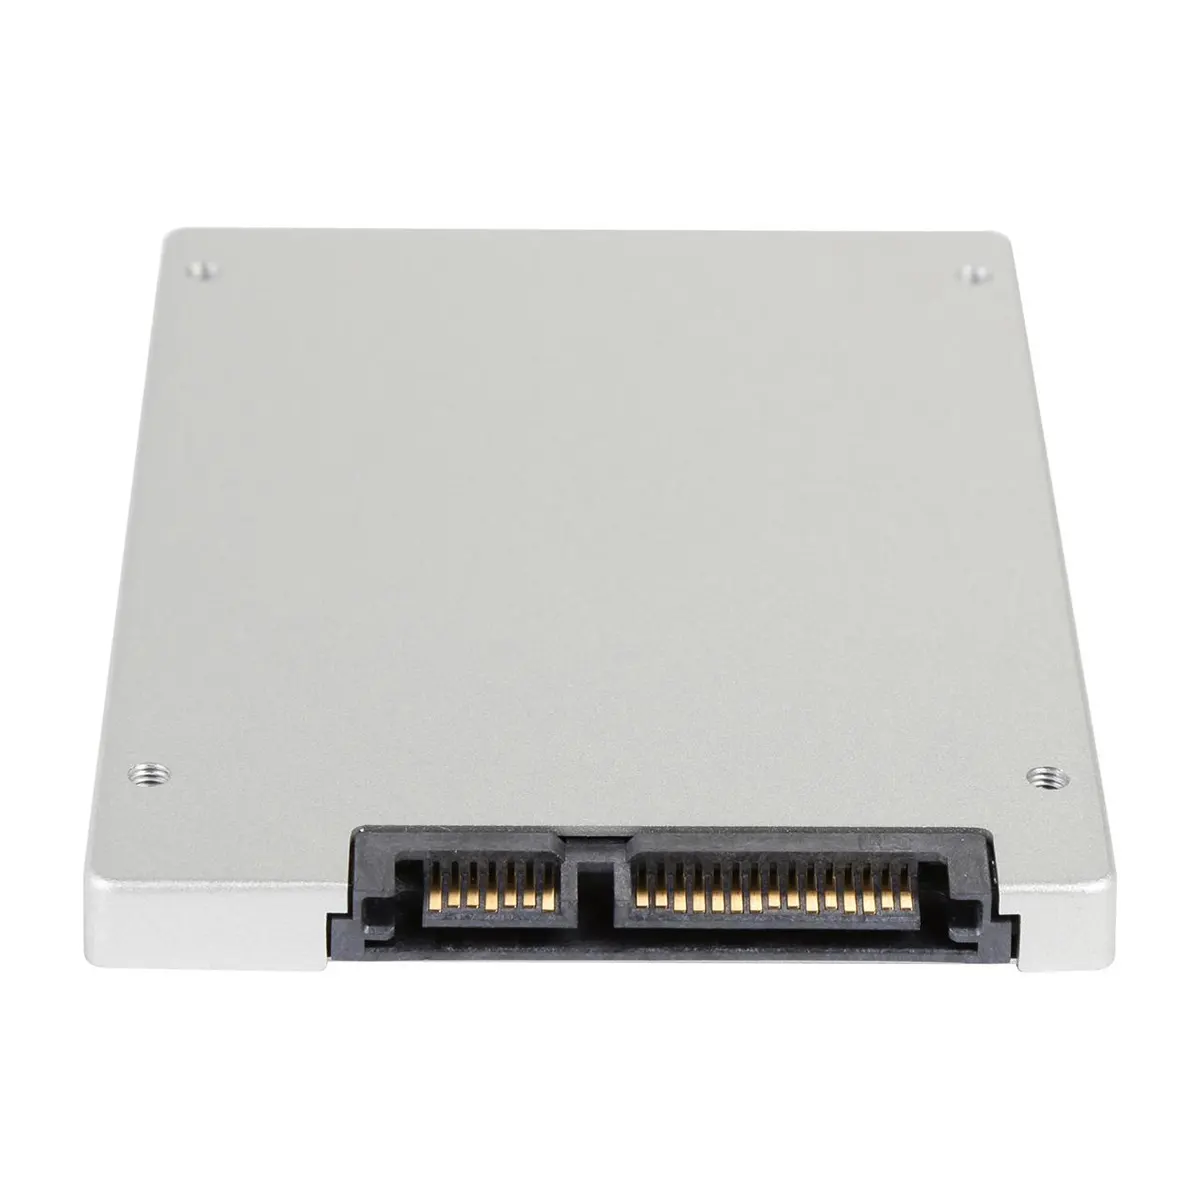 حافظه اس اس دی میکرون SSD Micron M550 128GB MTFDDAK128MAY